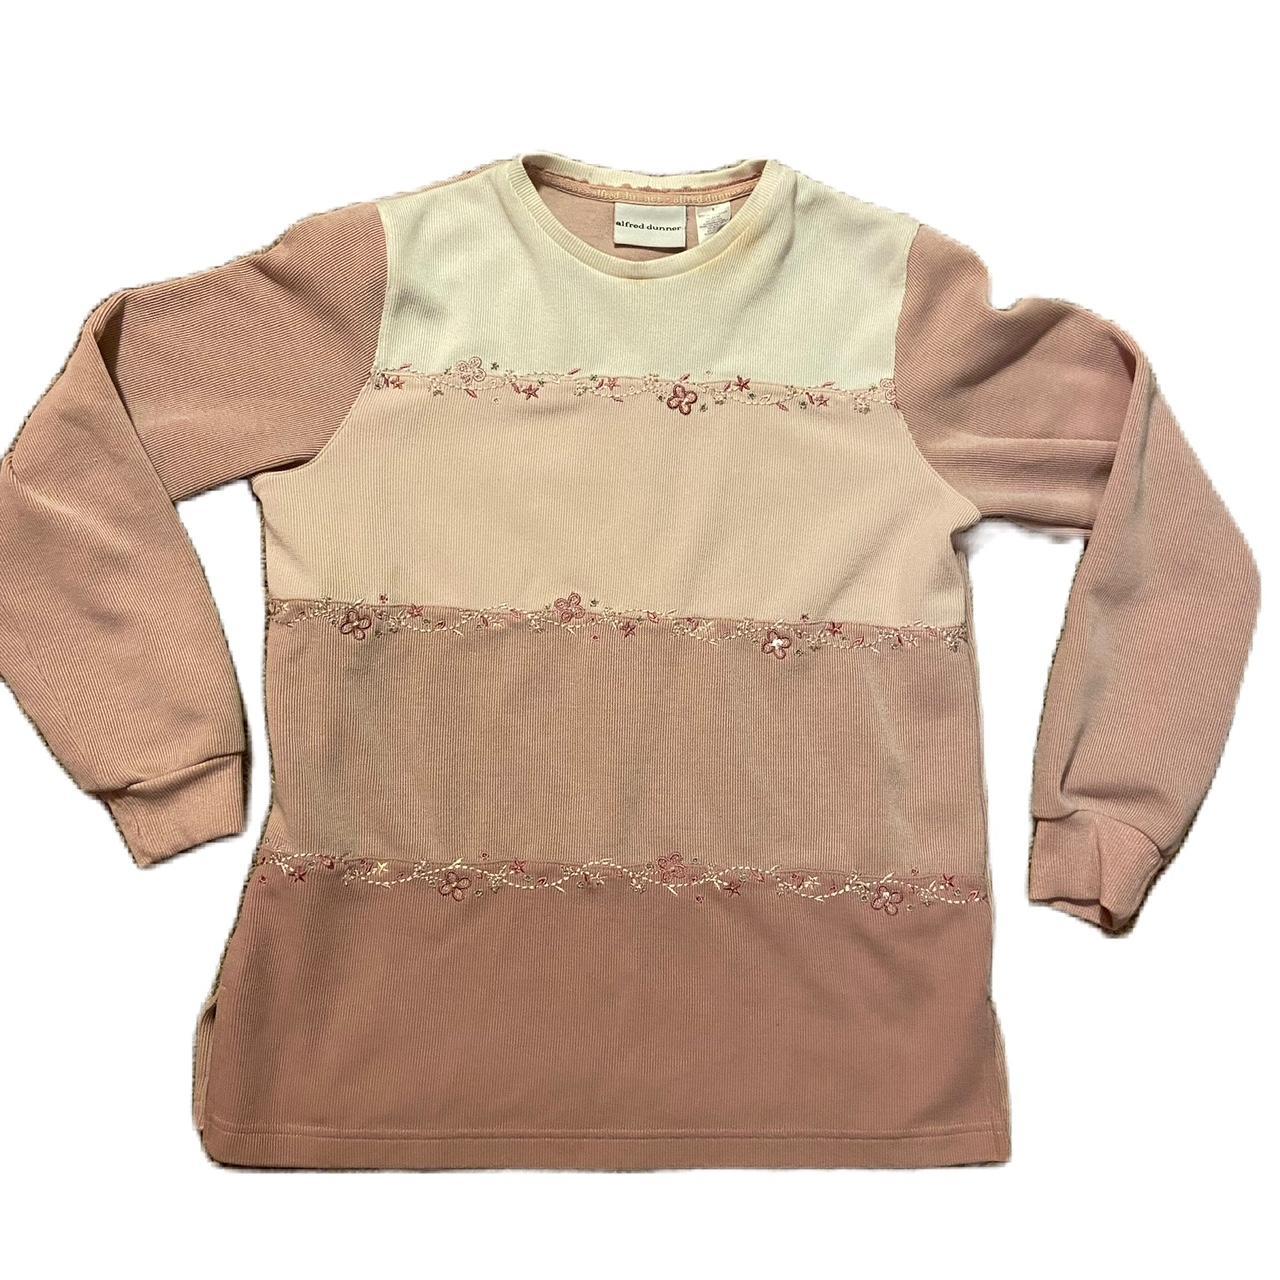 Alfred Dunner Women's Pink and Cream Sweatshirt